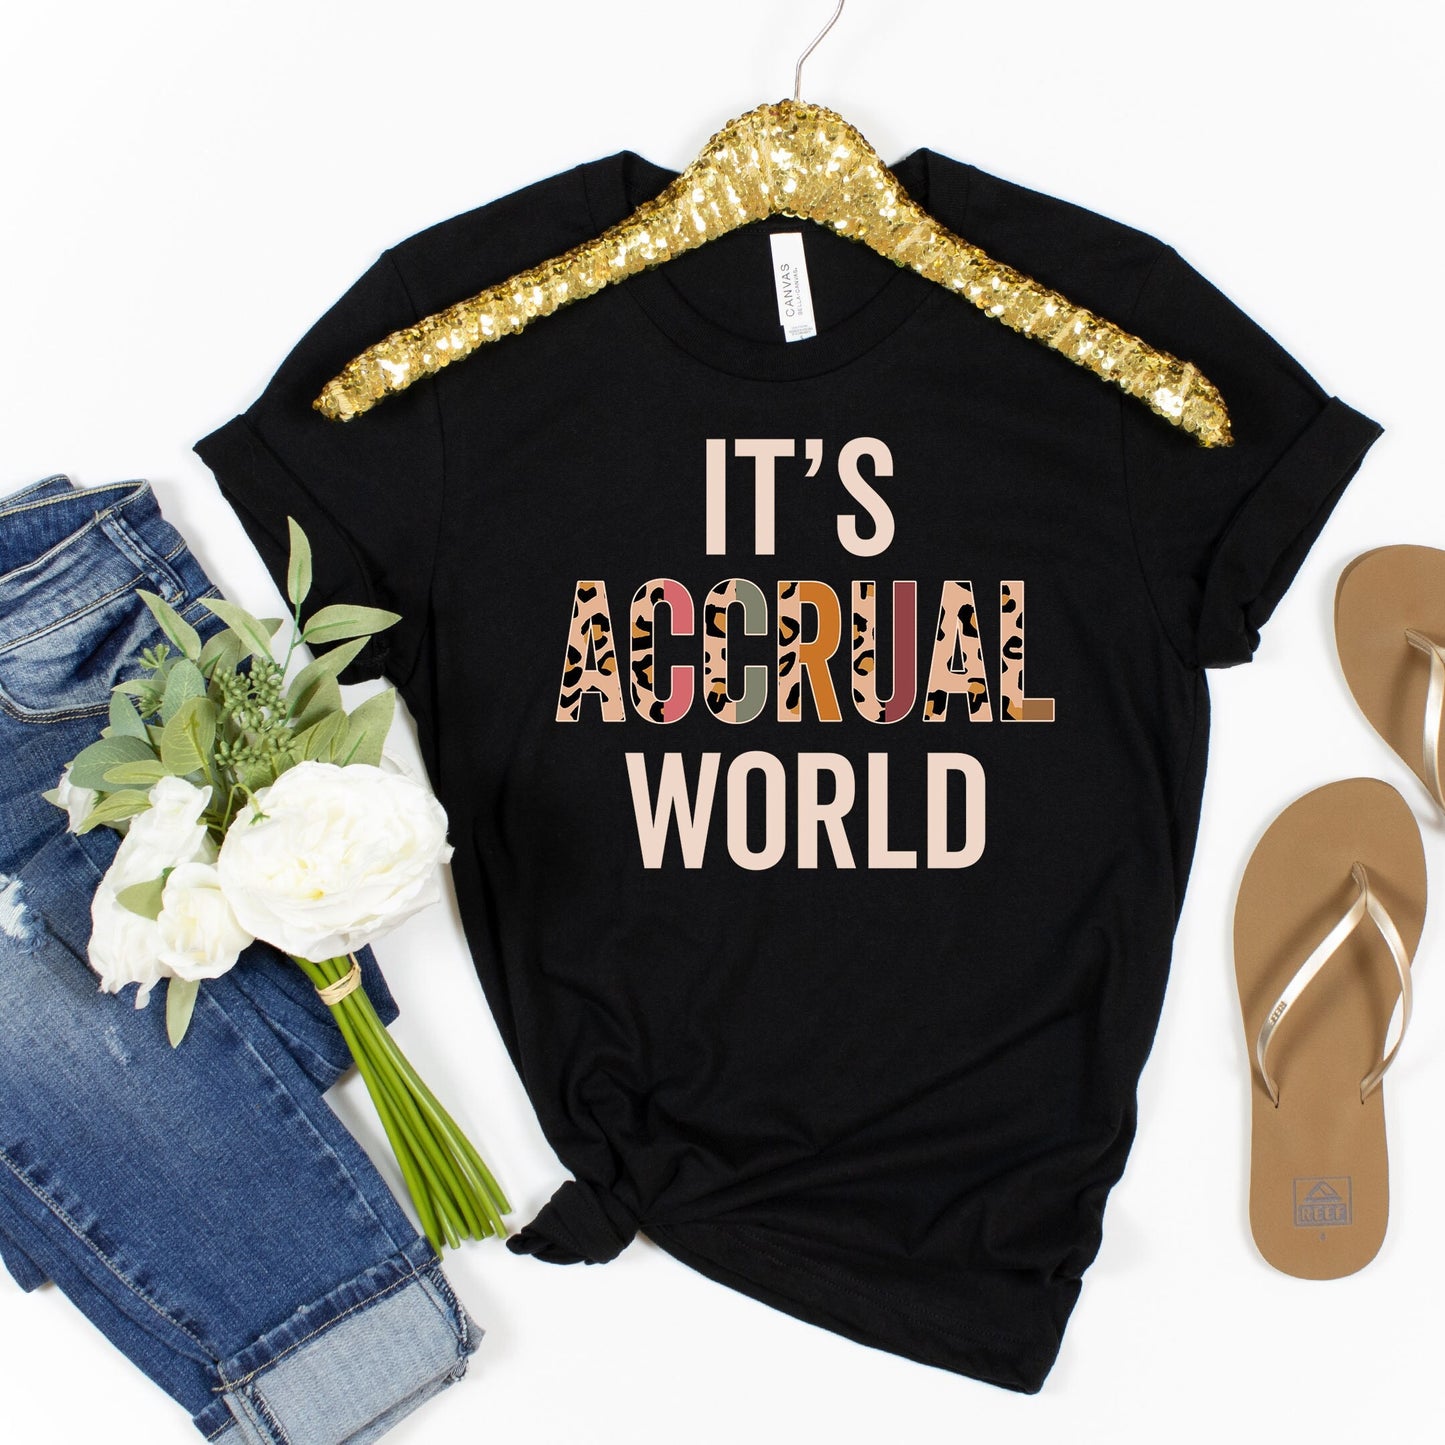 It's Accrual World Shirt, Funny CPA Accounting Tee Design, Tax Advisor Gift Idea, Funny Accountant Jokes Gift, Accounting Saying Tax Season